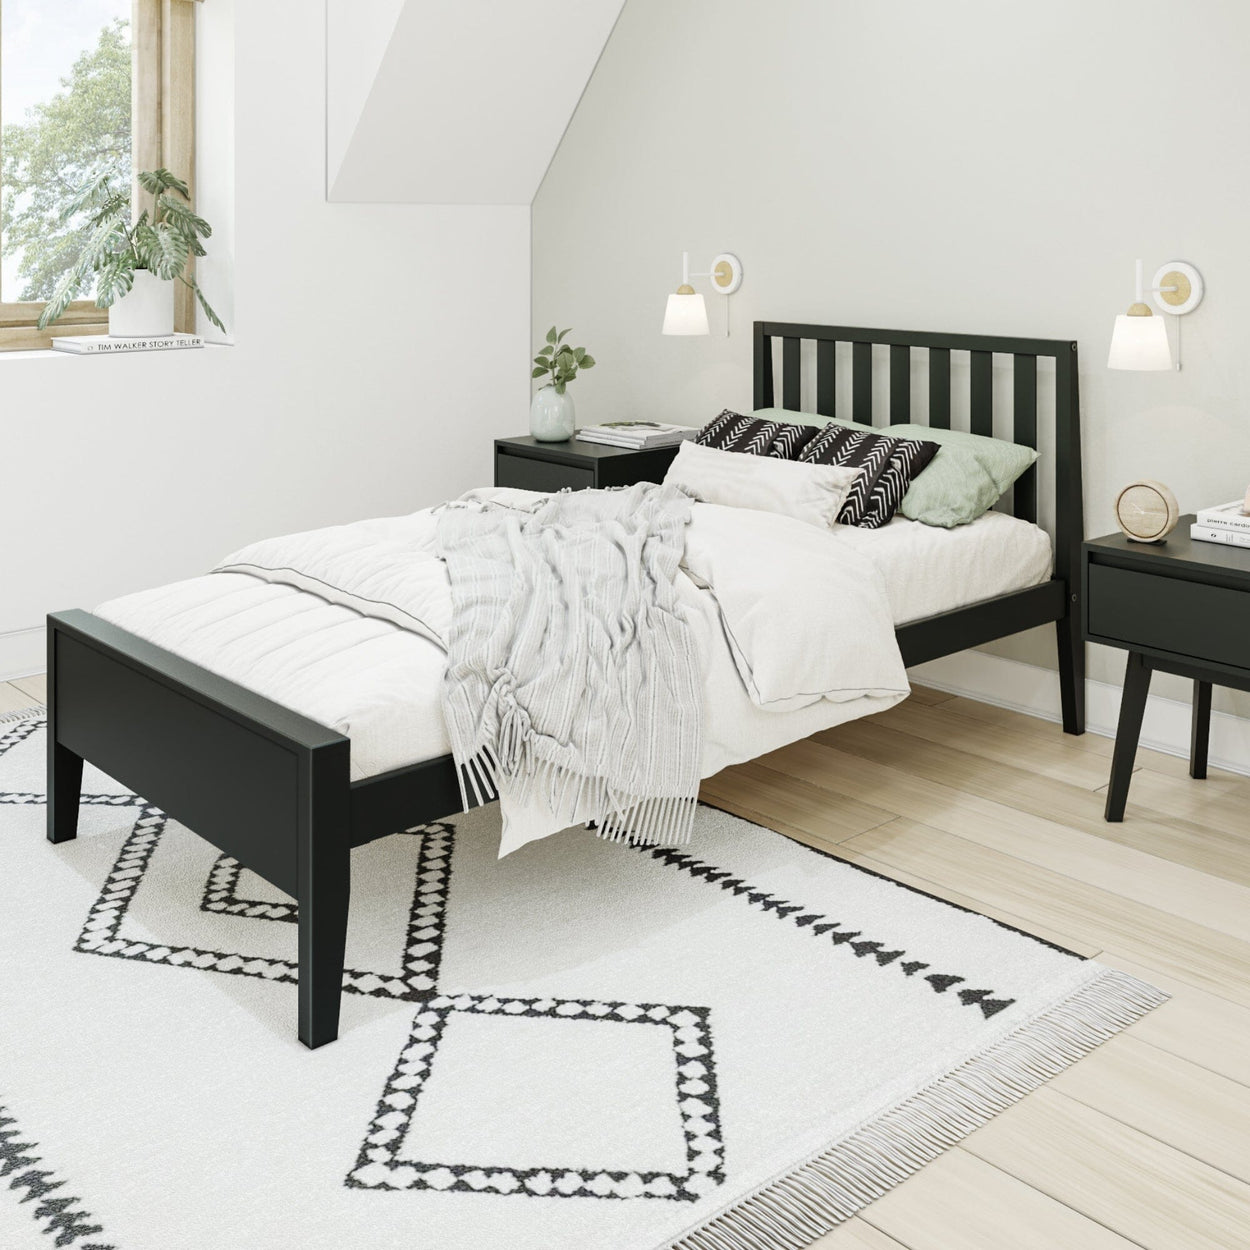 210210-170 : Kids Beds Scandinavian Twin-Size Bed with Slatted Headboard, Black